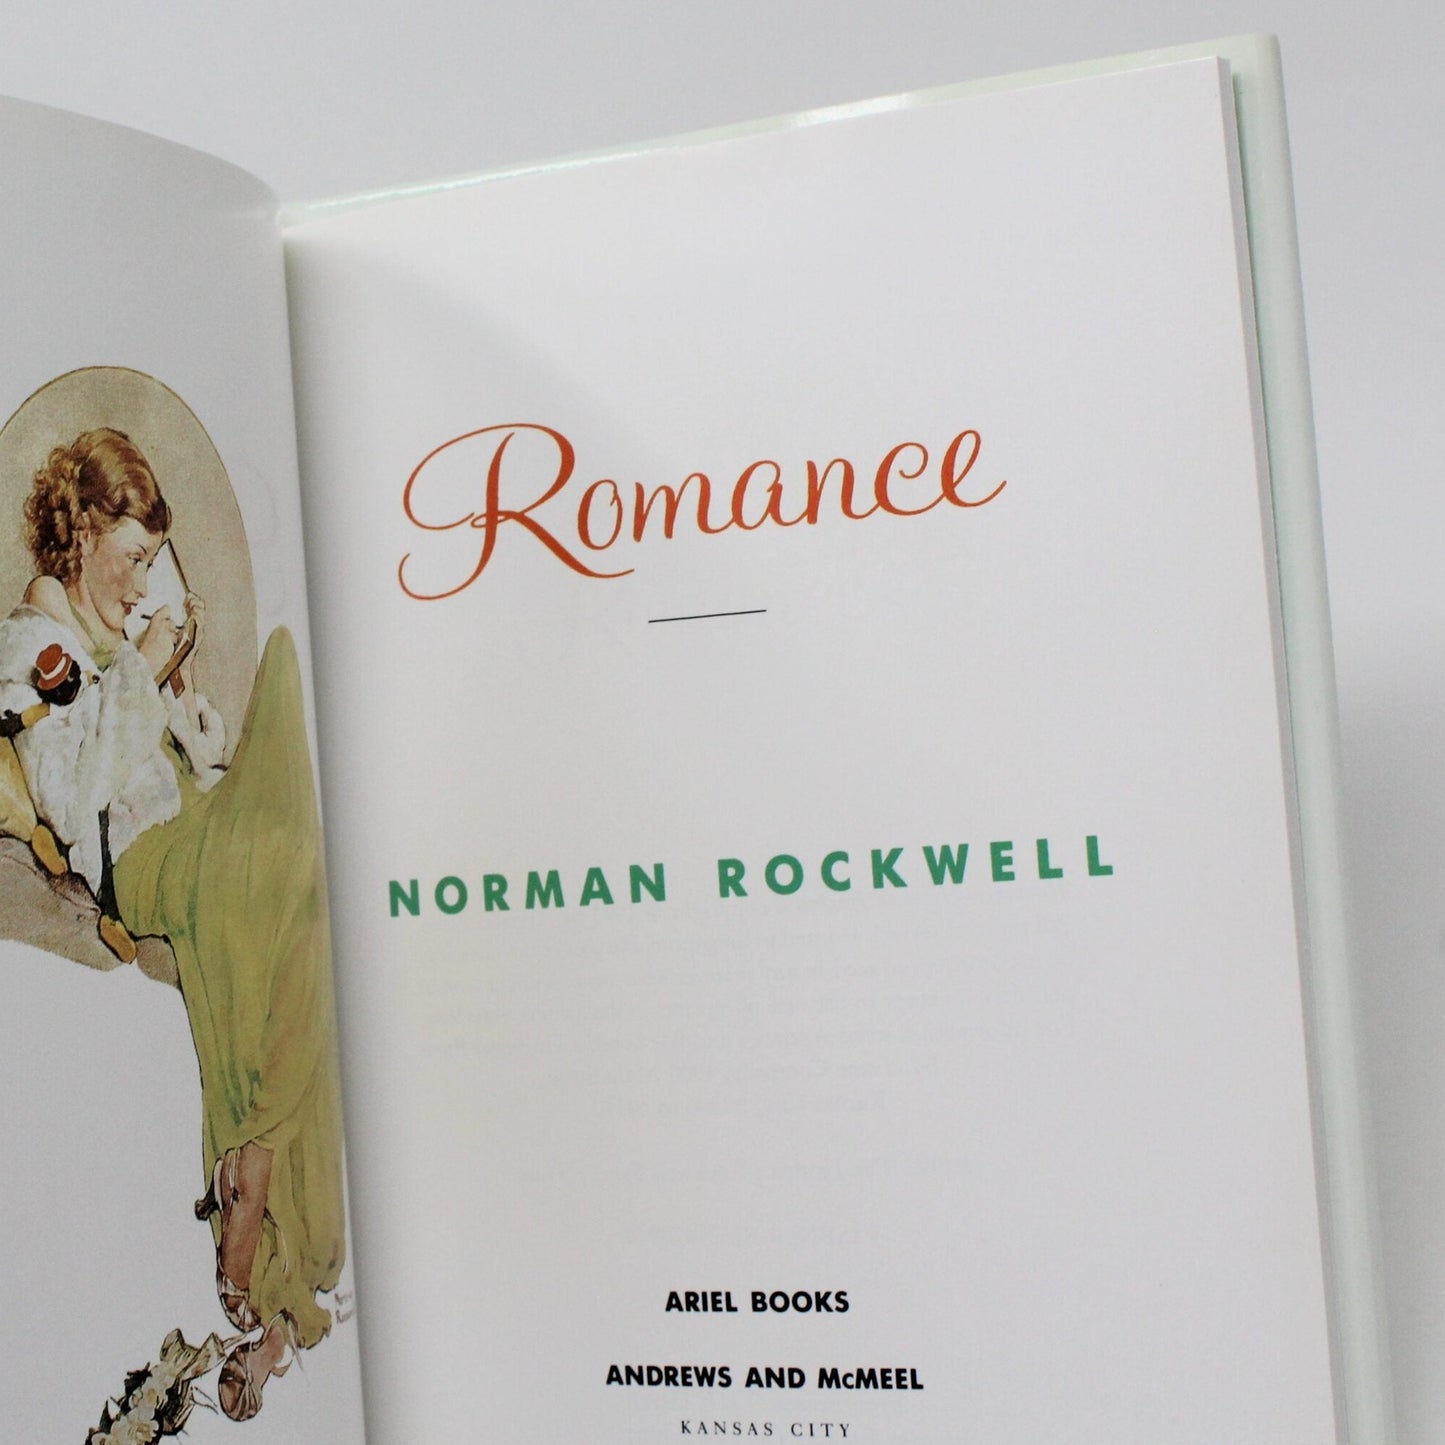 Book, Norman Rockwell, Romance, Susan Hood, 1993